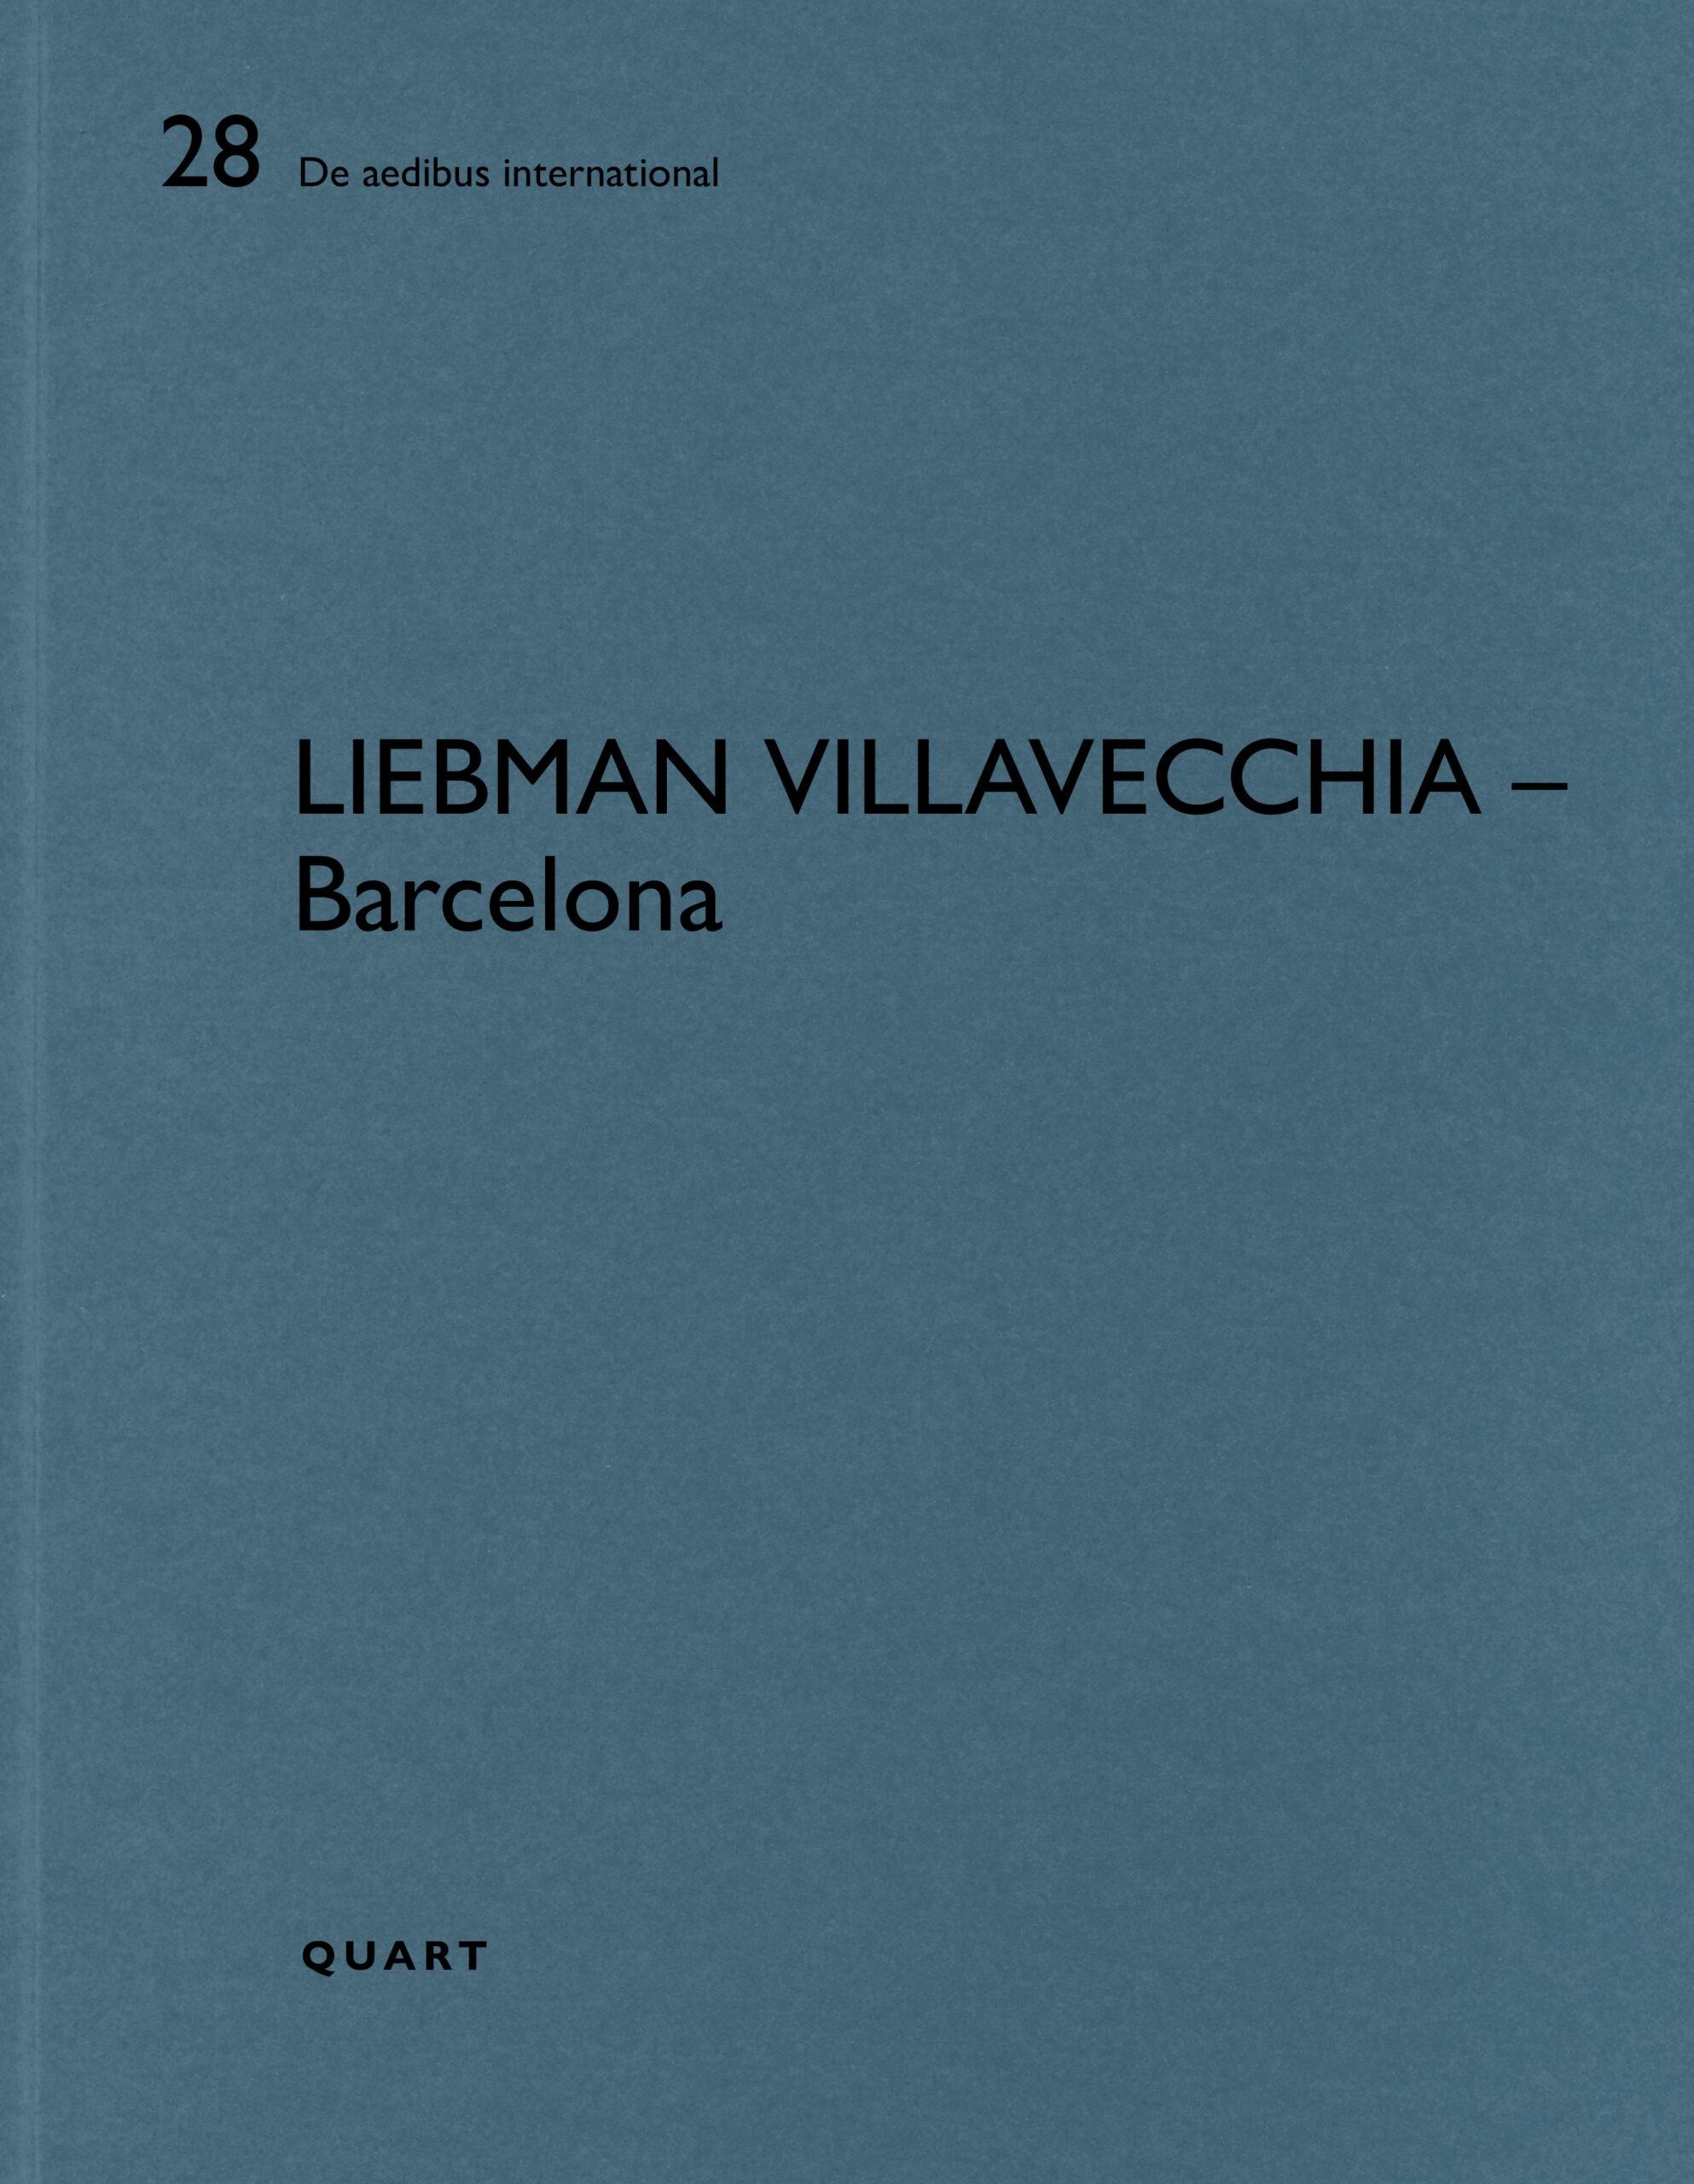 LIEBMAN VILLAVECCHIA - BARCELONA. 